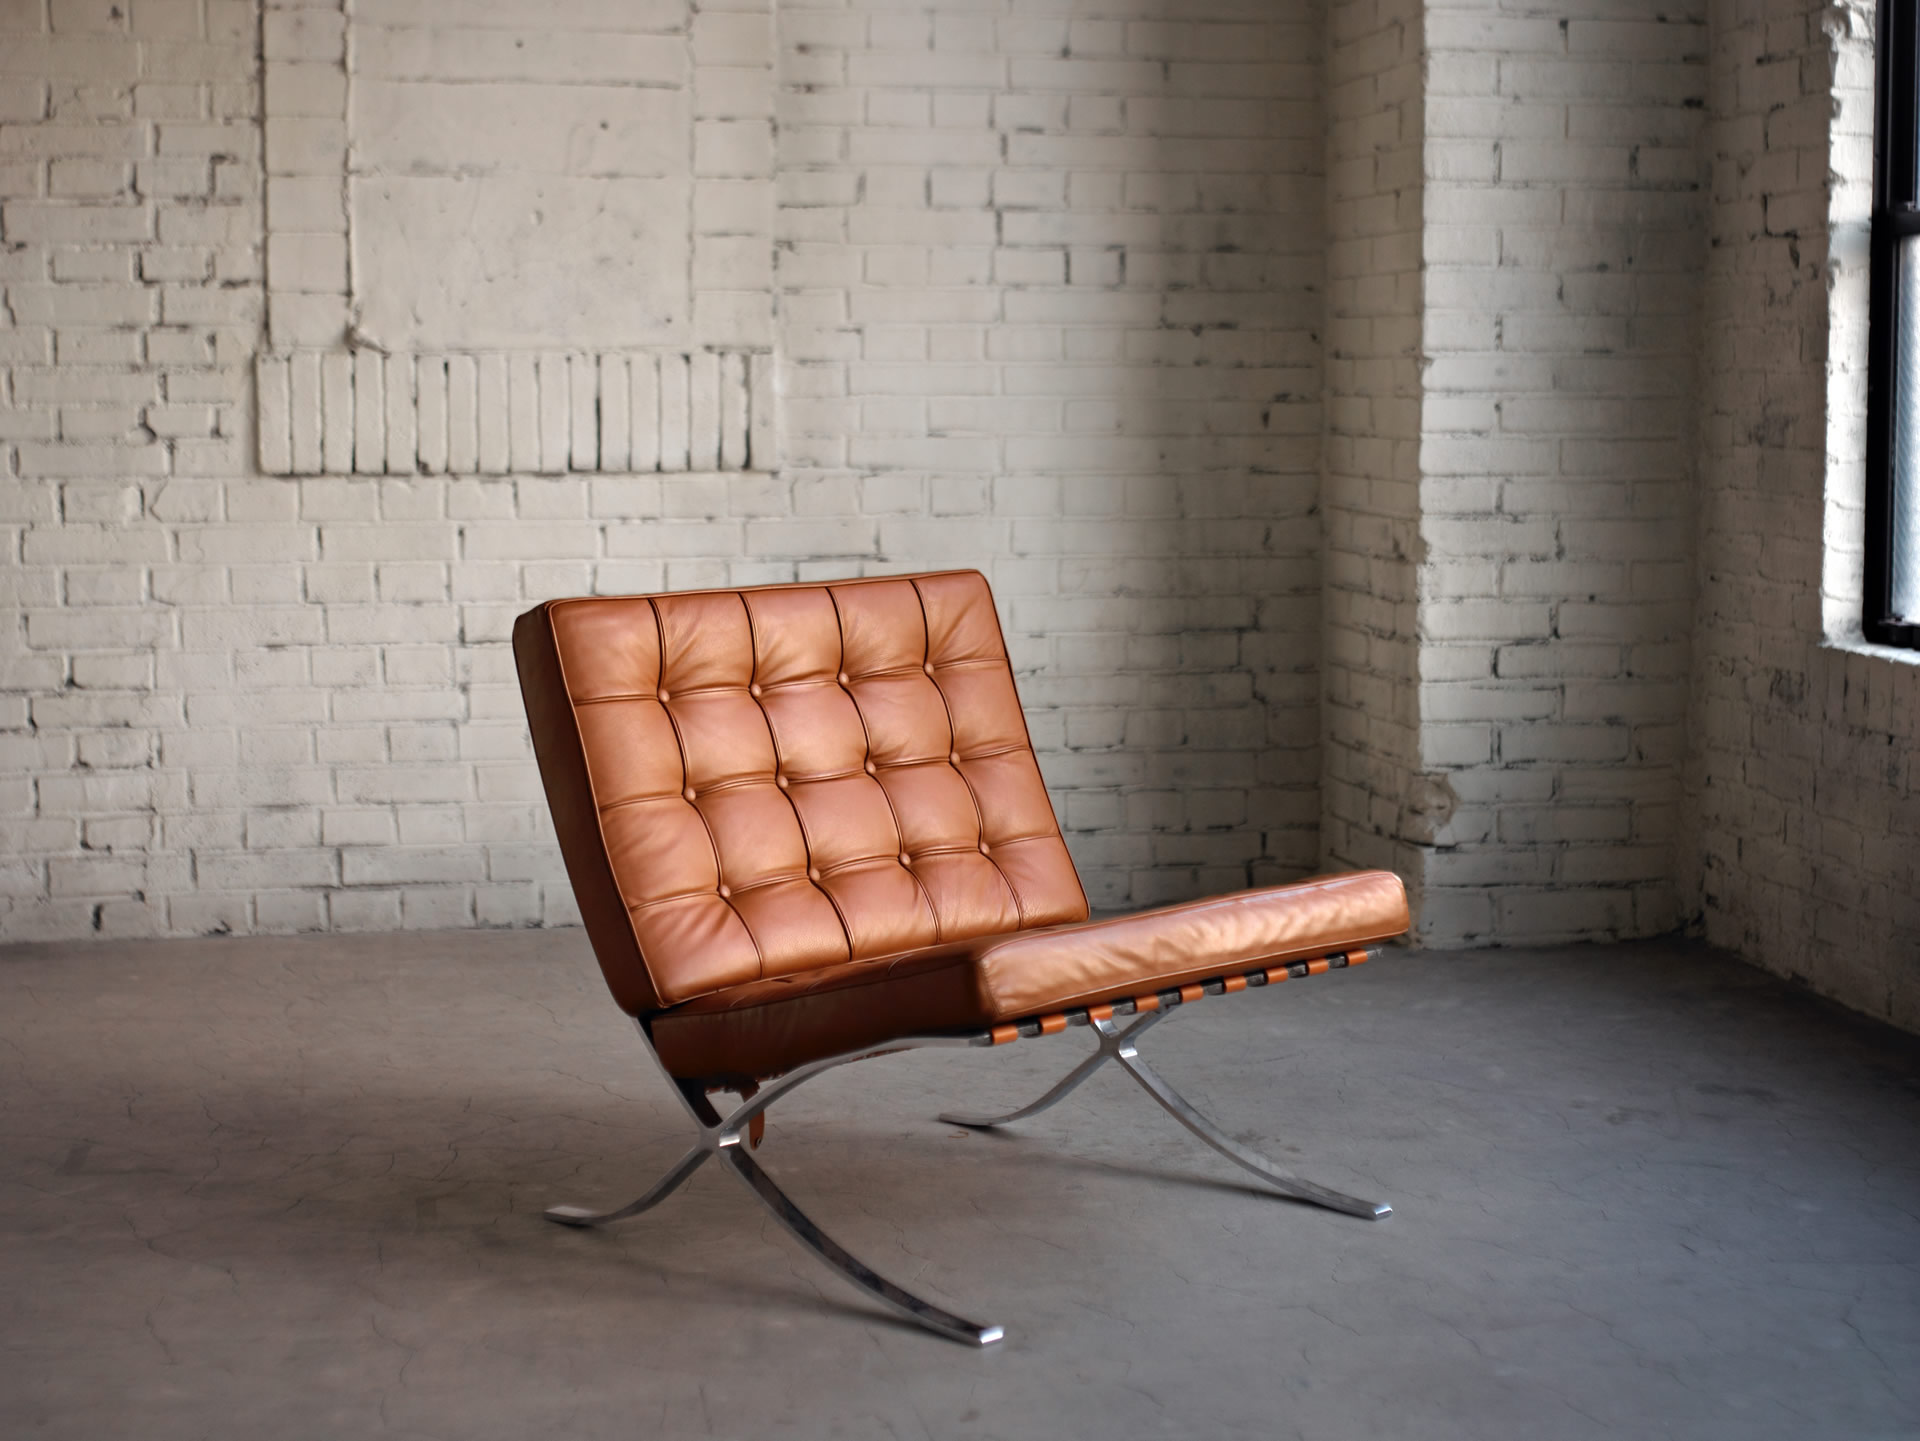 1920x1441, 261 Kb / кресло, кожа, стенка, кирпич, Mies van der Rohe